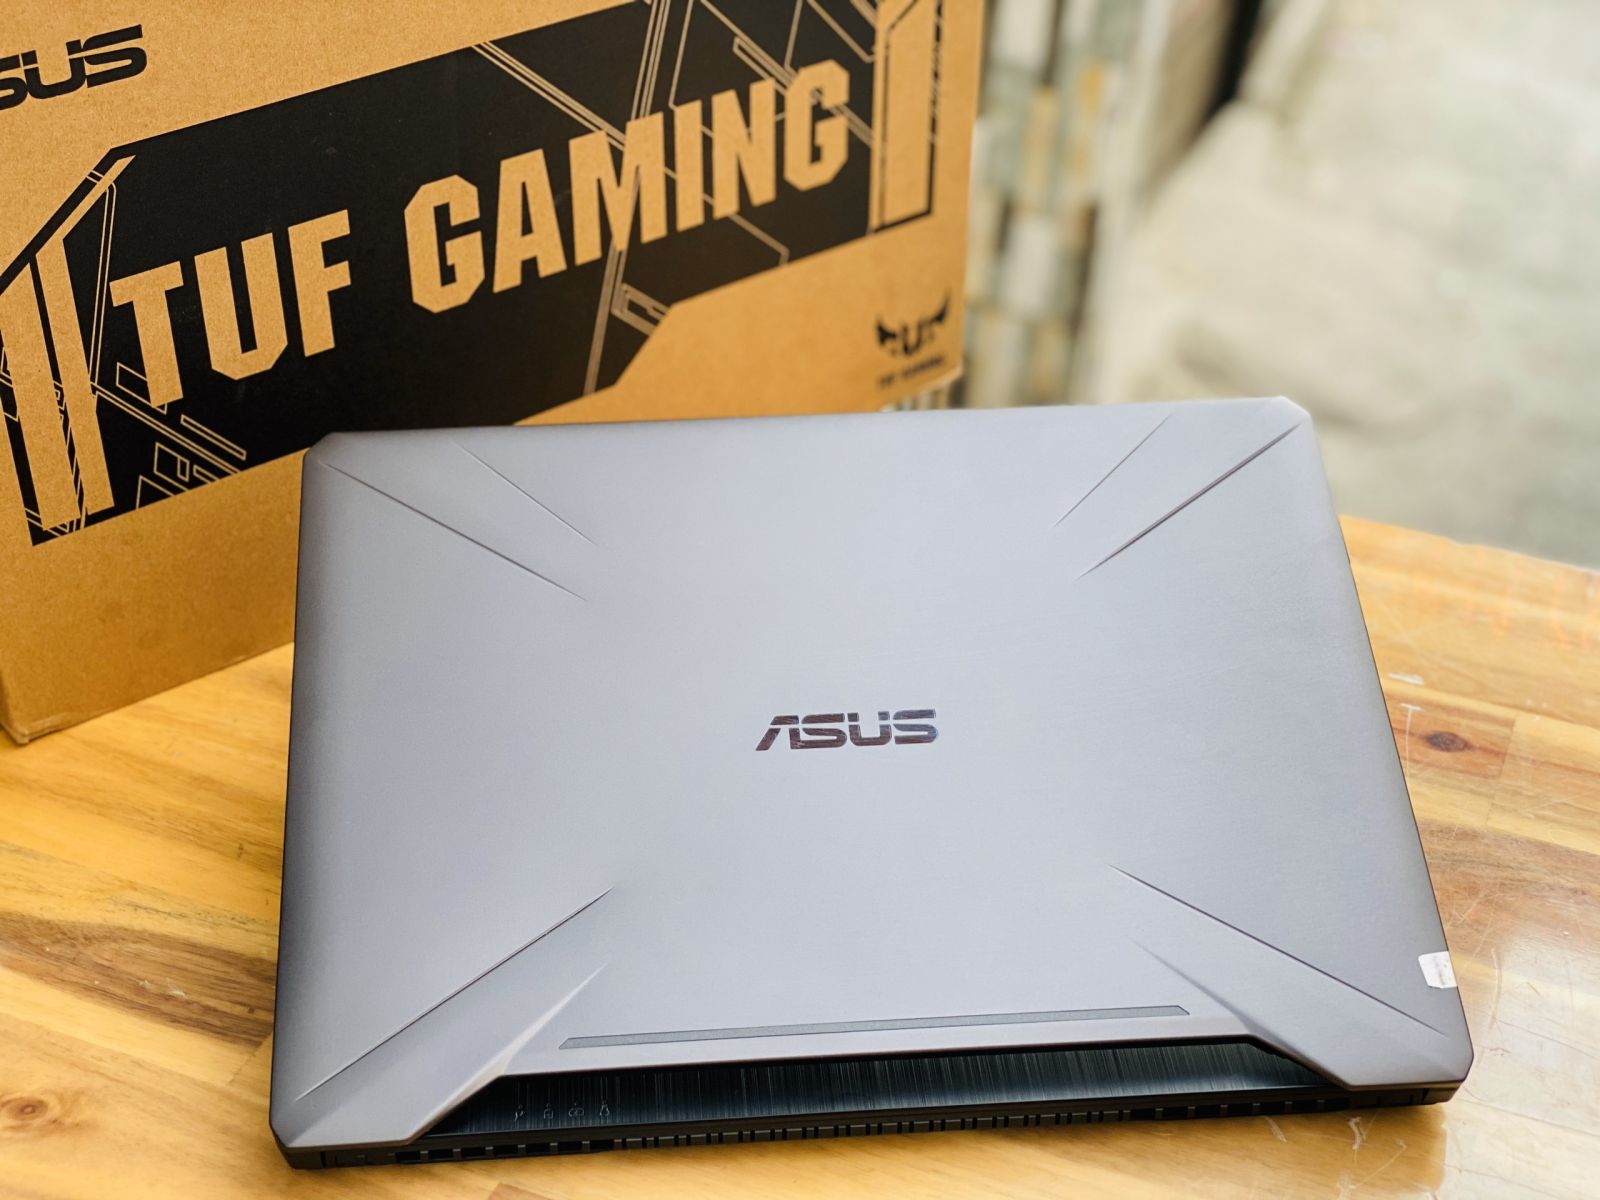 Laptop Asus TUF Gaming FX505GE/ i7 8750H 12CPUS/ 8G/ SSD128 + 1000G/ GTX1050TI 4G/ Viền Mỏng/ LED RGB/ Giá Rẻ